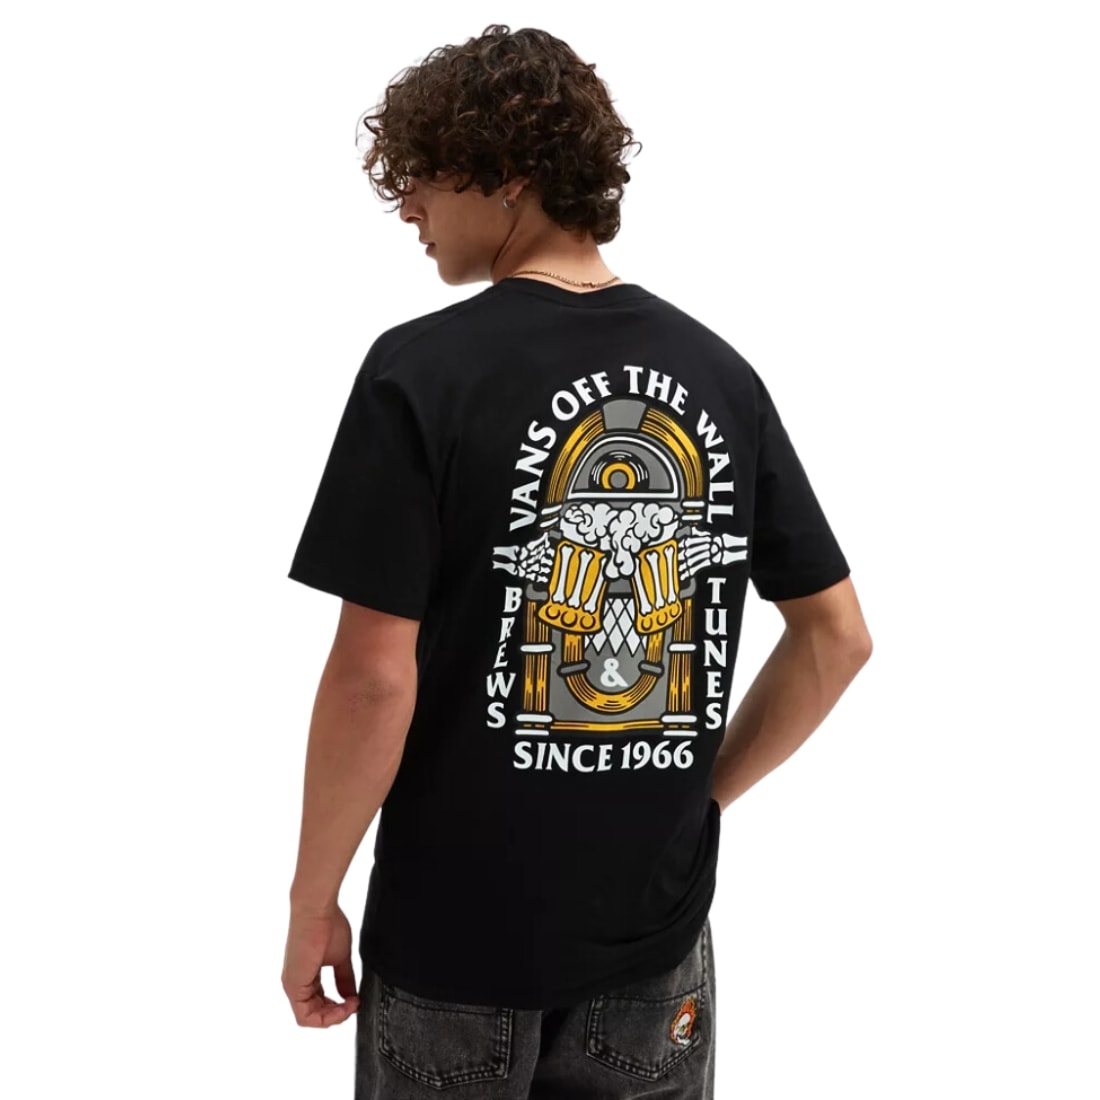 Vans Brew Bros Tunes T-Shirt - Black - Mens Graphic T-Shirt by Vans